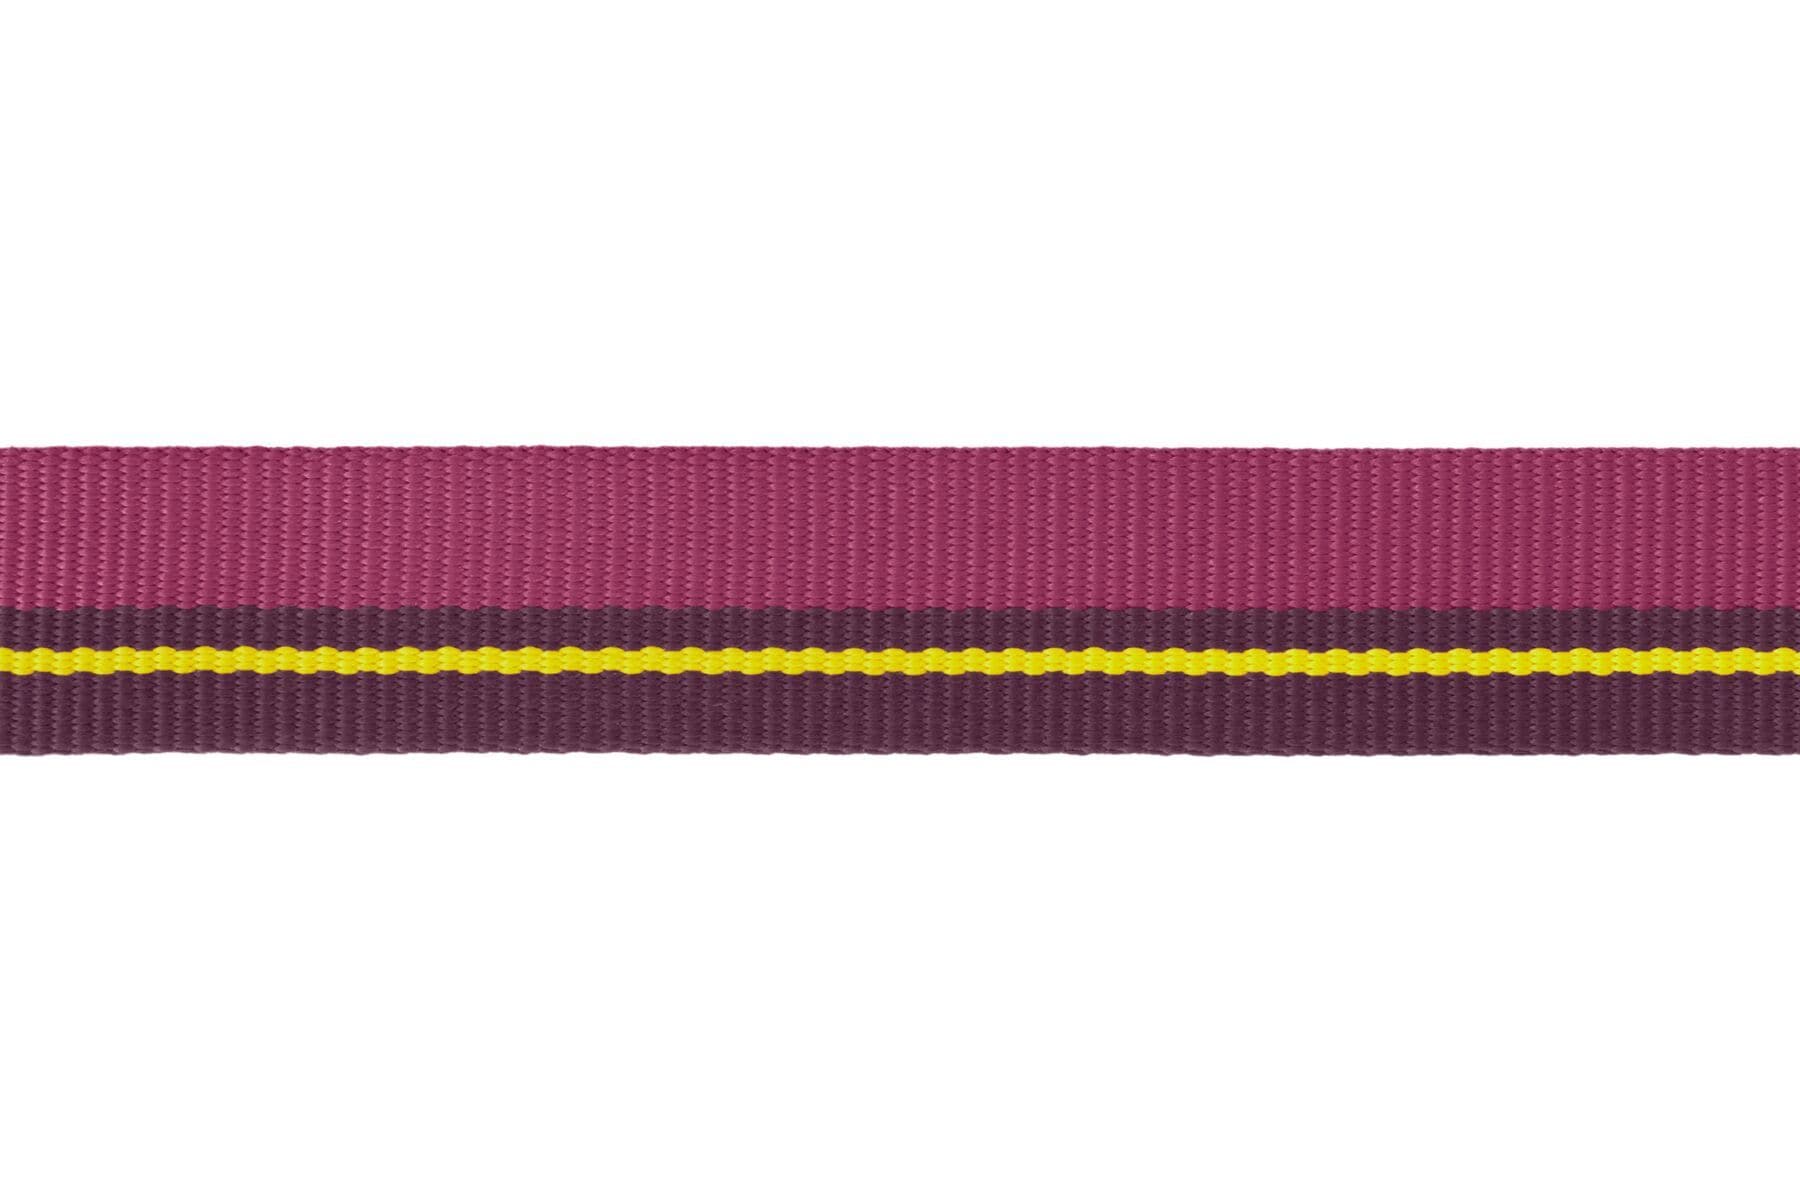 Correa Flat Out Leash Colores Lisos Purpura (Wildflower Horizon) - Ruffwear Mexico